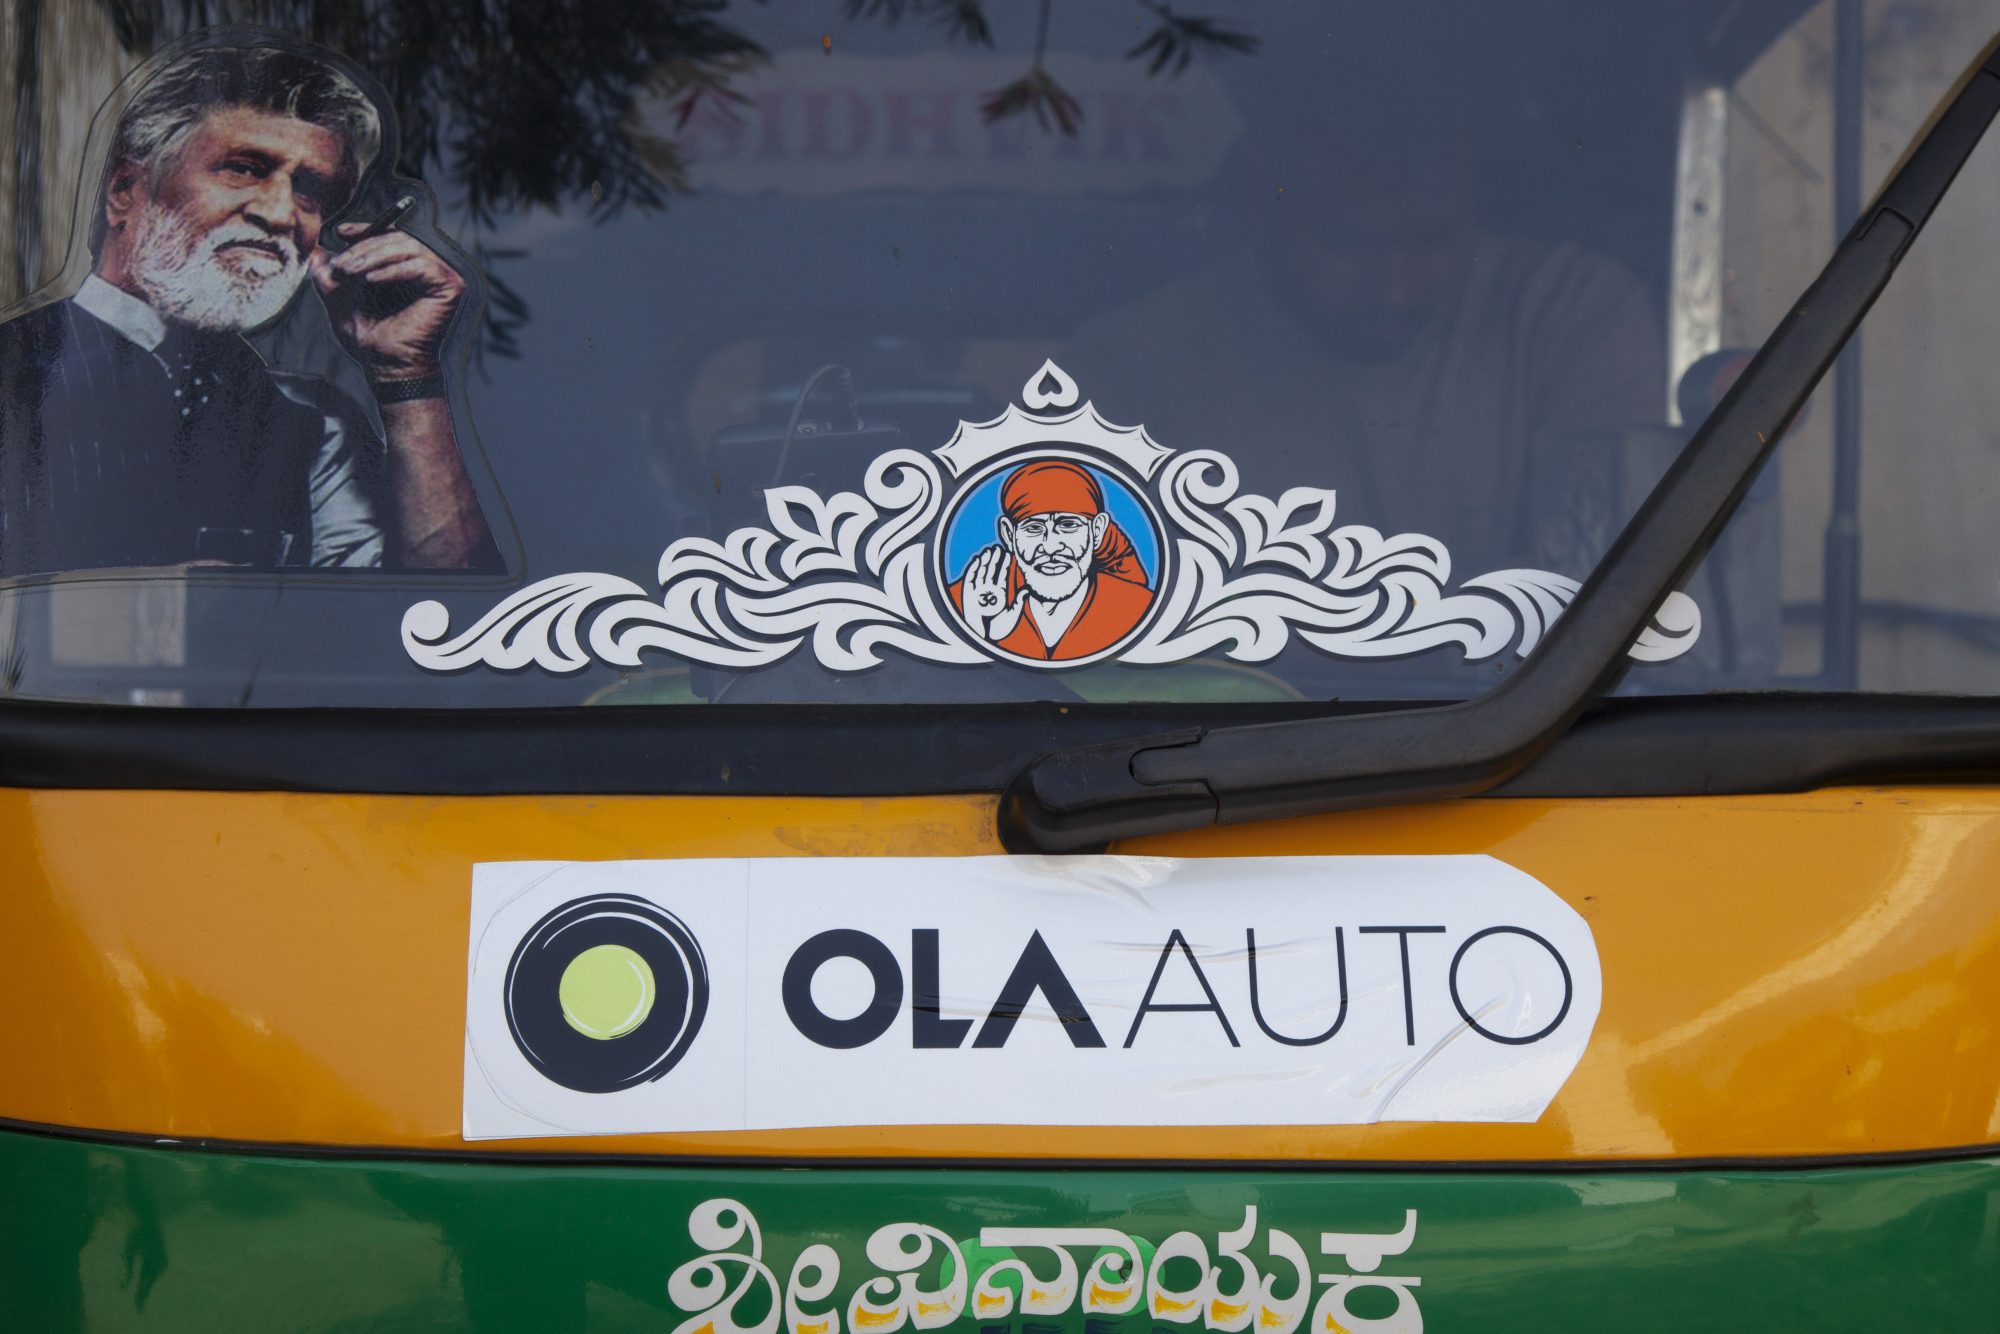 India's Ola Electric raises $200m round led by Falcon Edge, Softbank, others